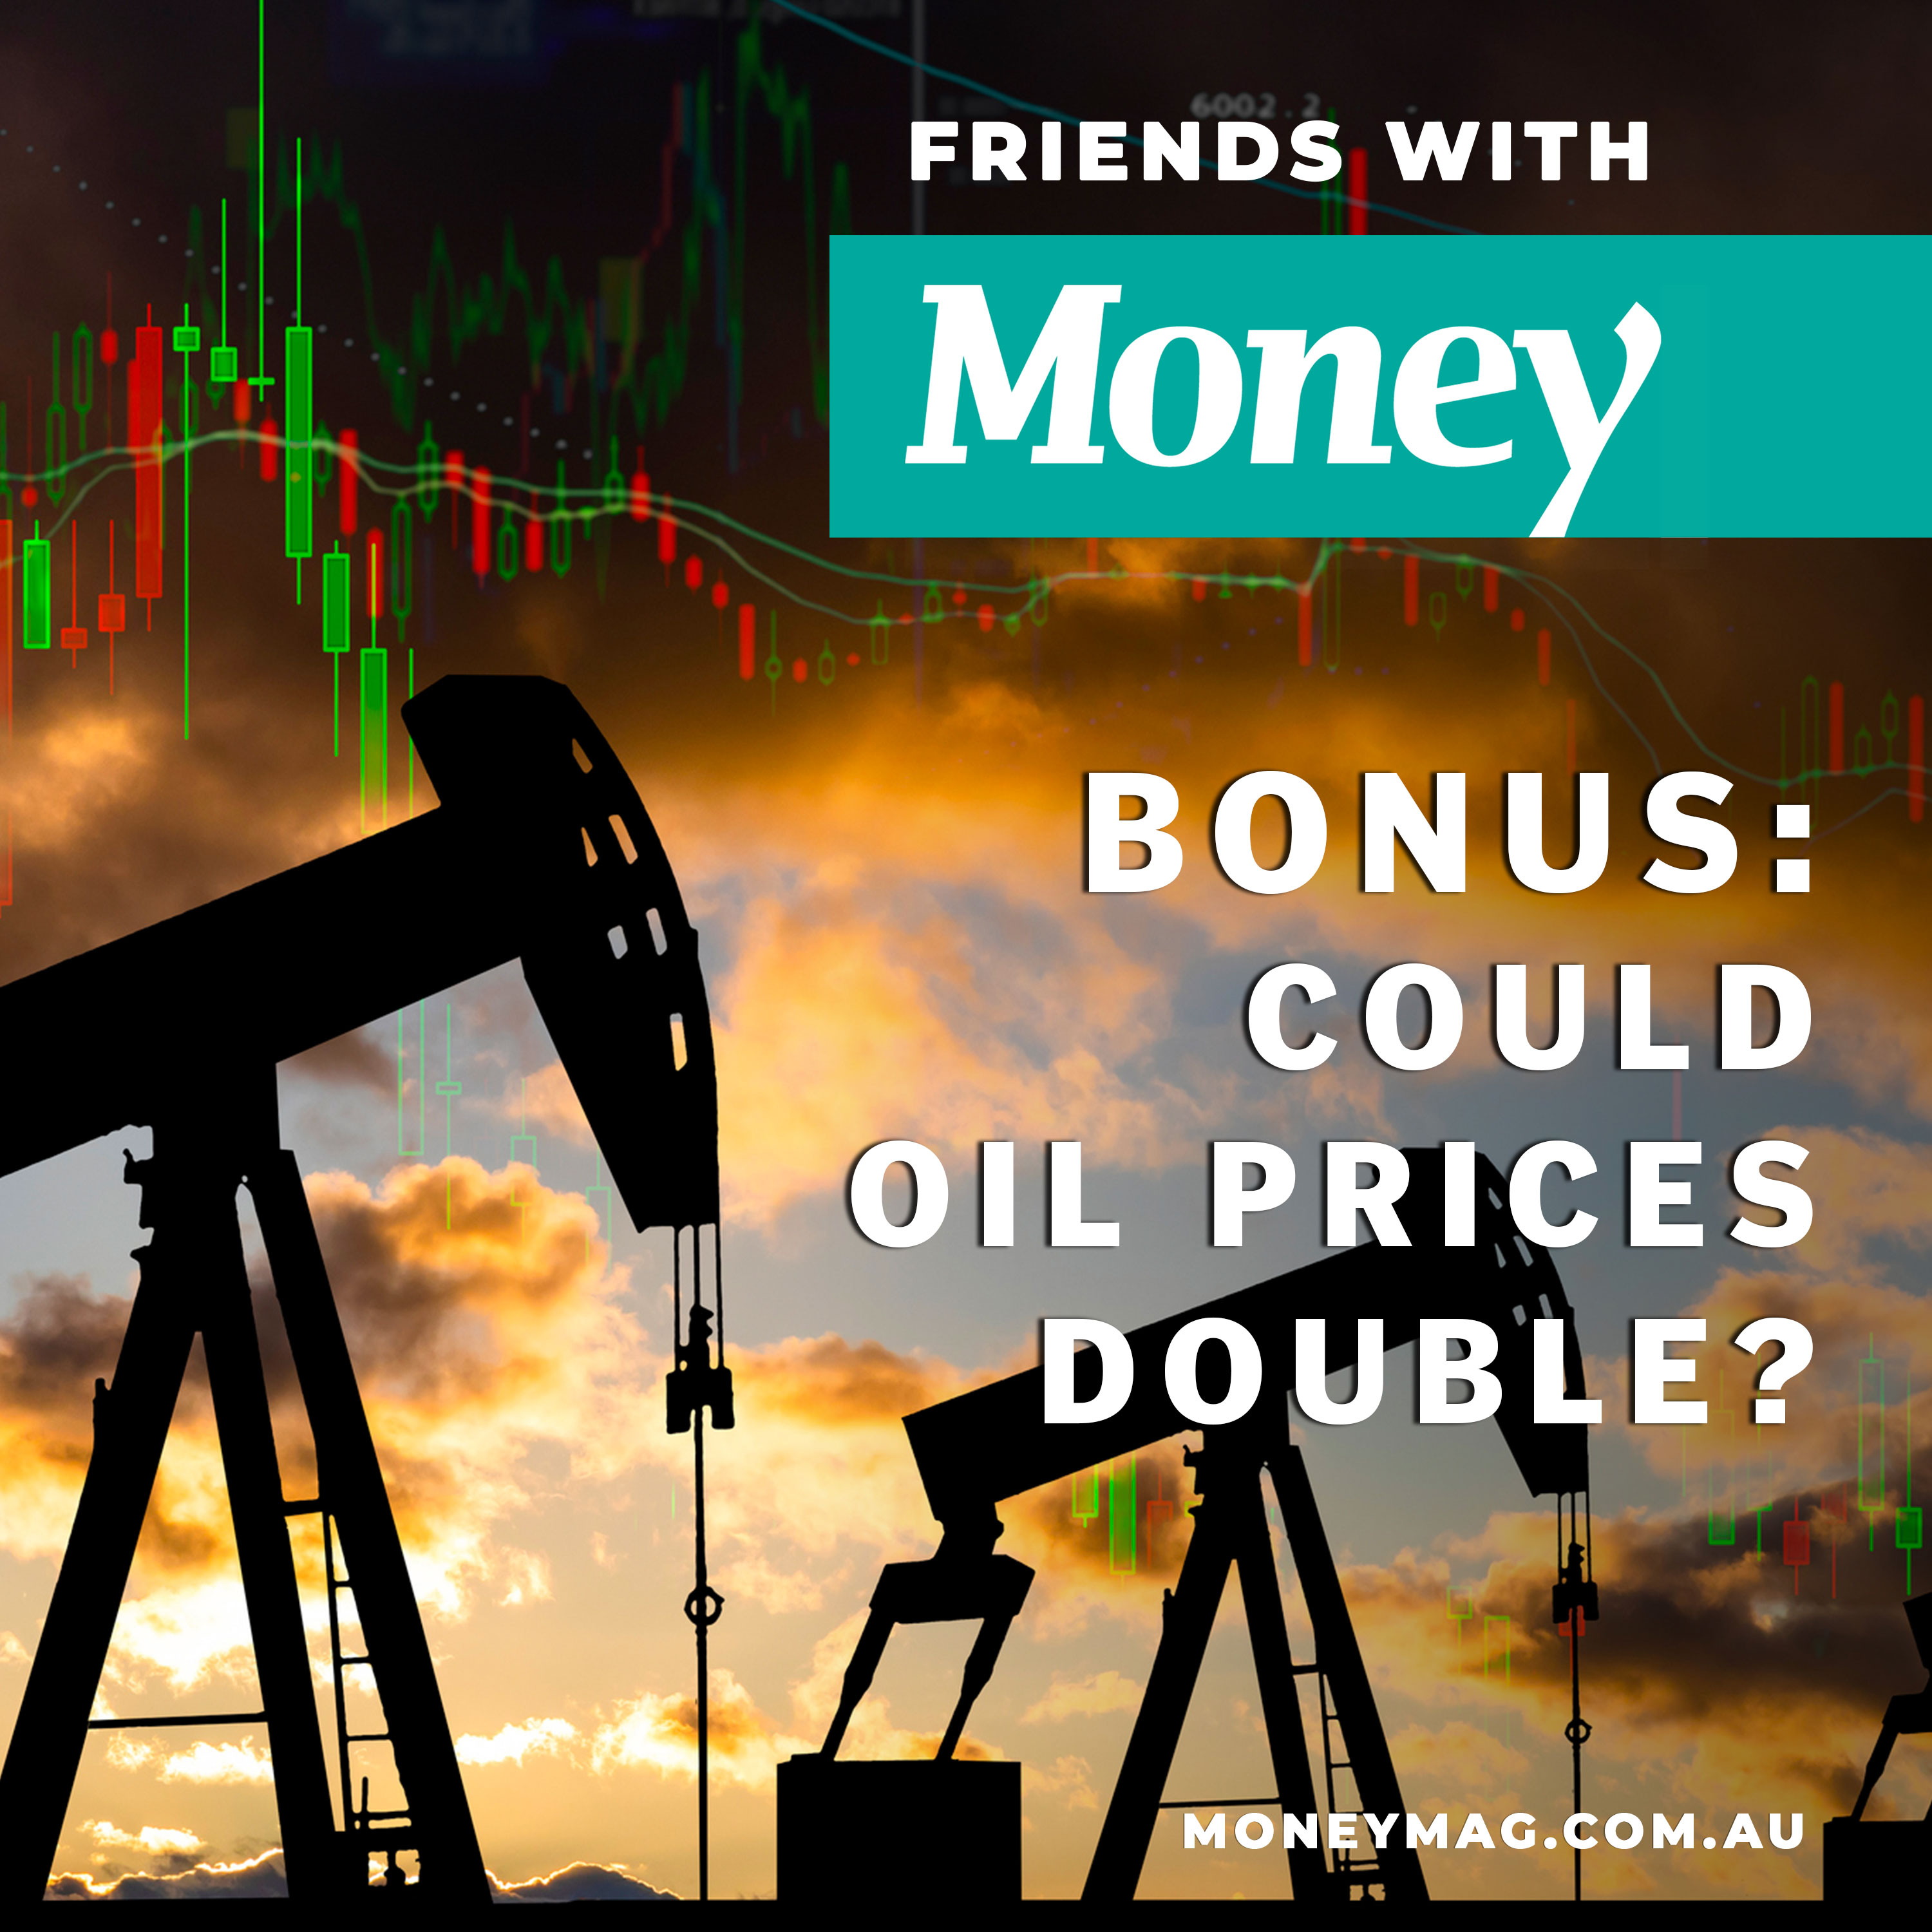 Bonus: could oil prices double?